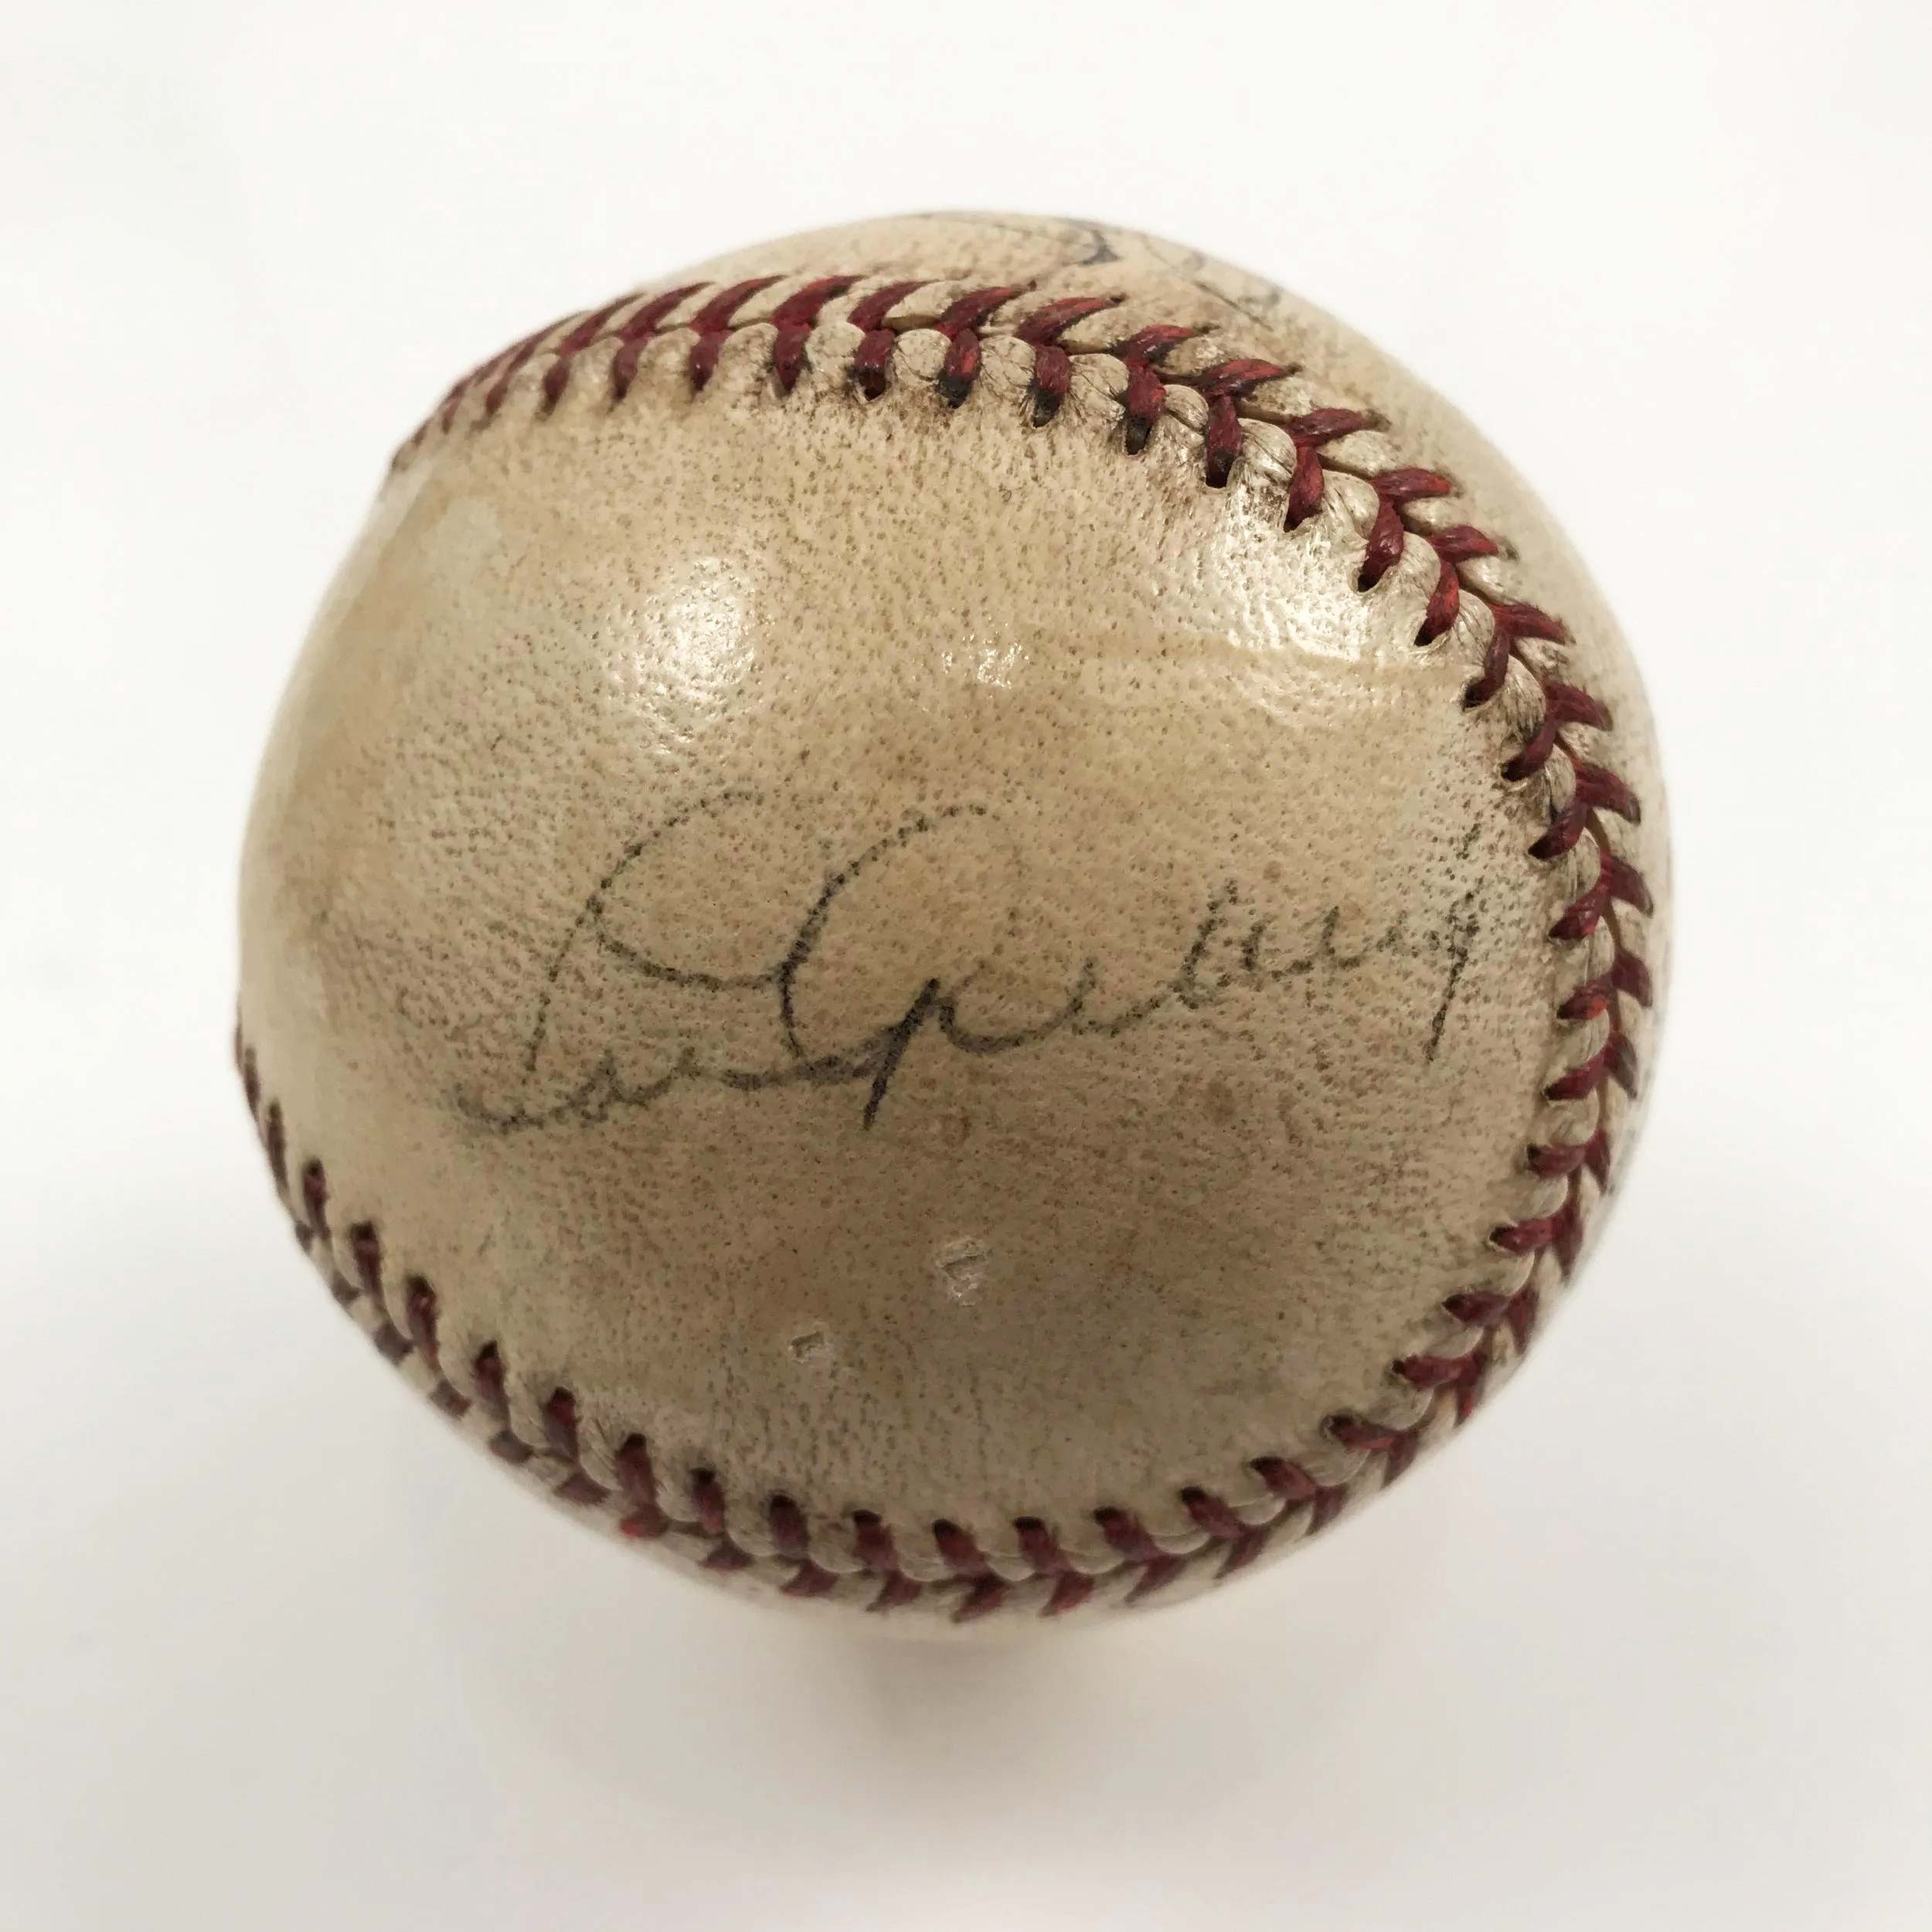 Lou Gehrig six-signature baseball, circa 1934-1939, estimate $8,000-$10,000. Image courtesy Fine Estate, Inc. and LiveAuctioneers.com